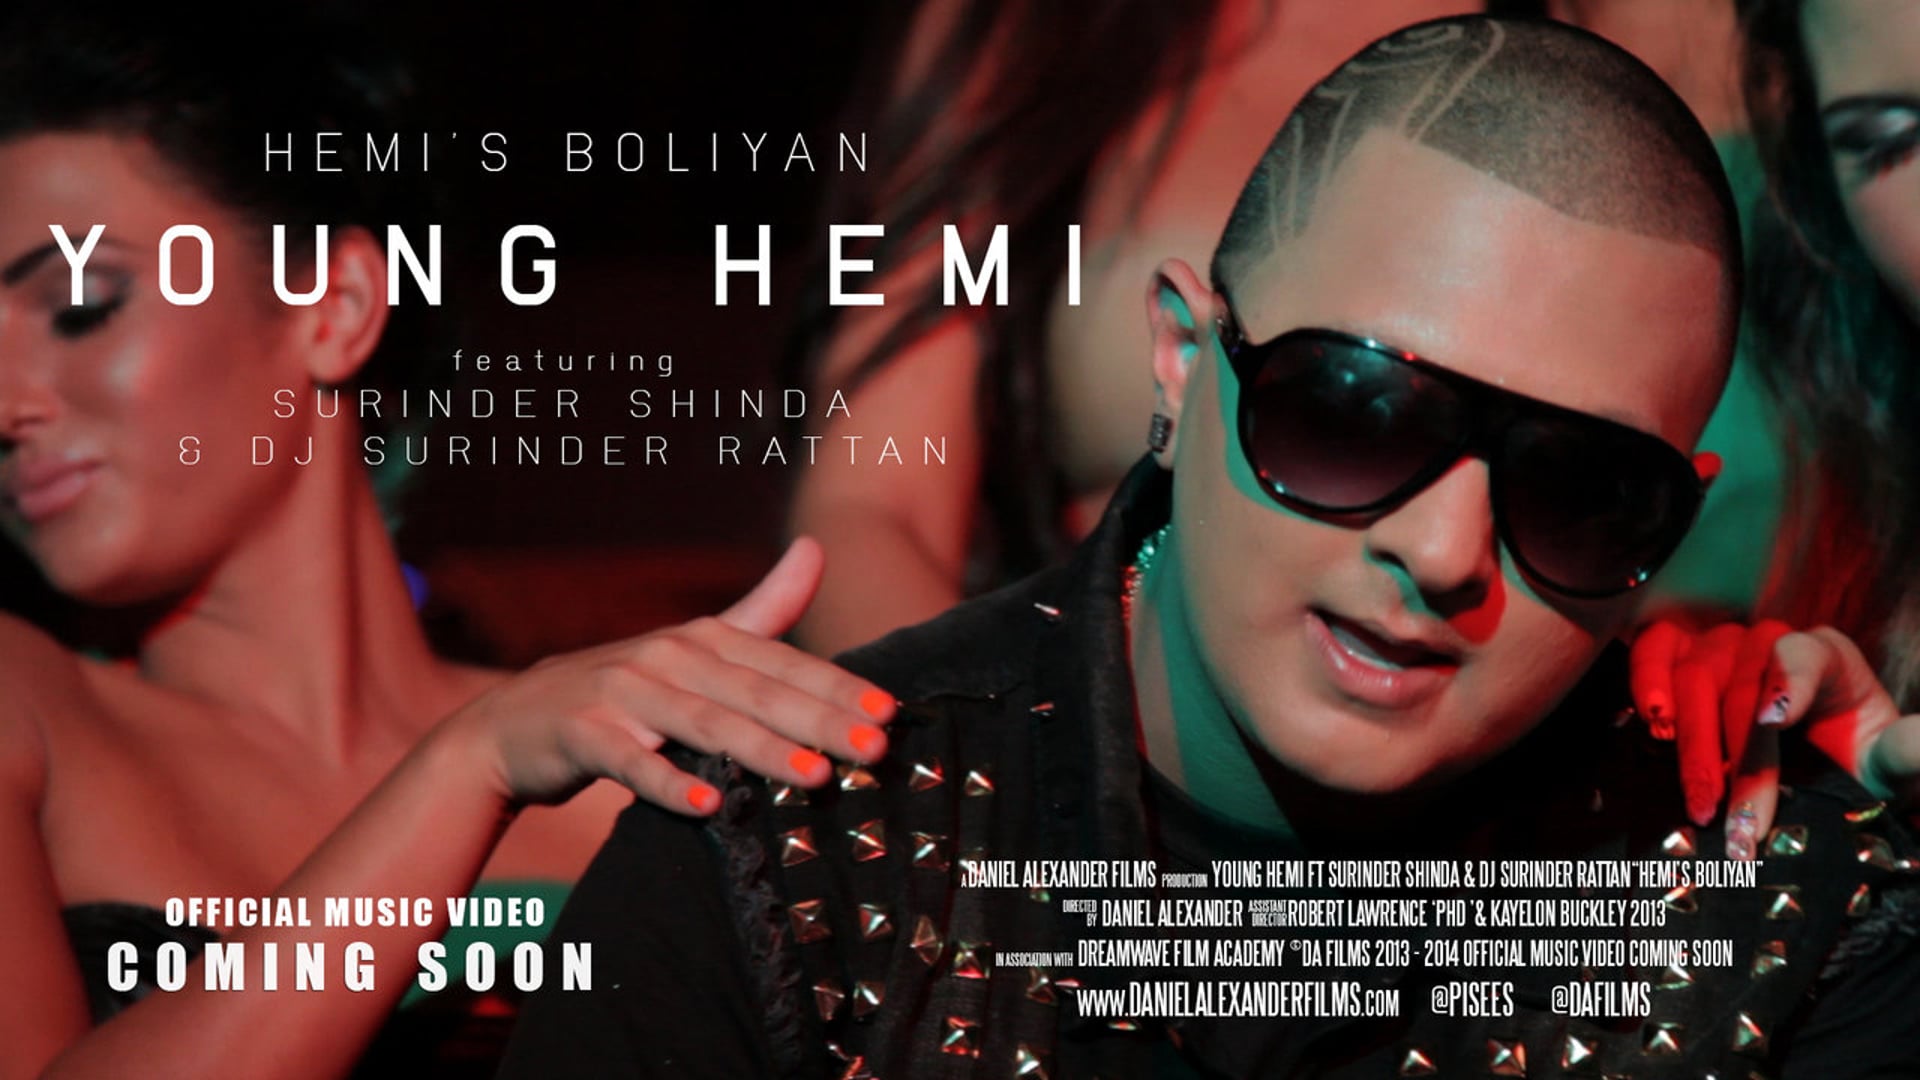 Young Hemi ft Surinder Shinda & DJ Surinder Rattan "HEMI'S BOLIYAN" Official Music Video